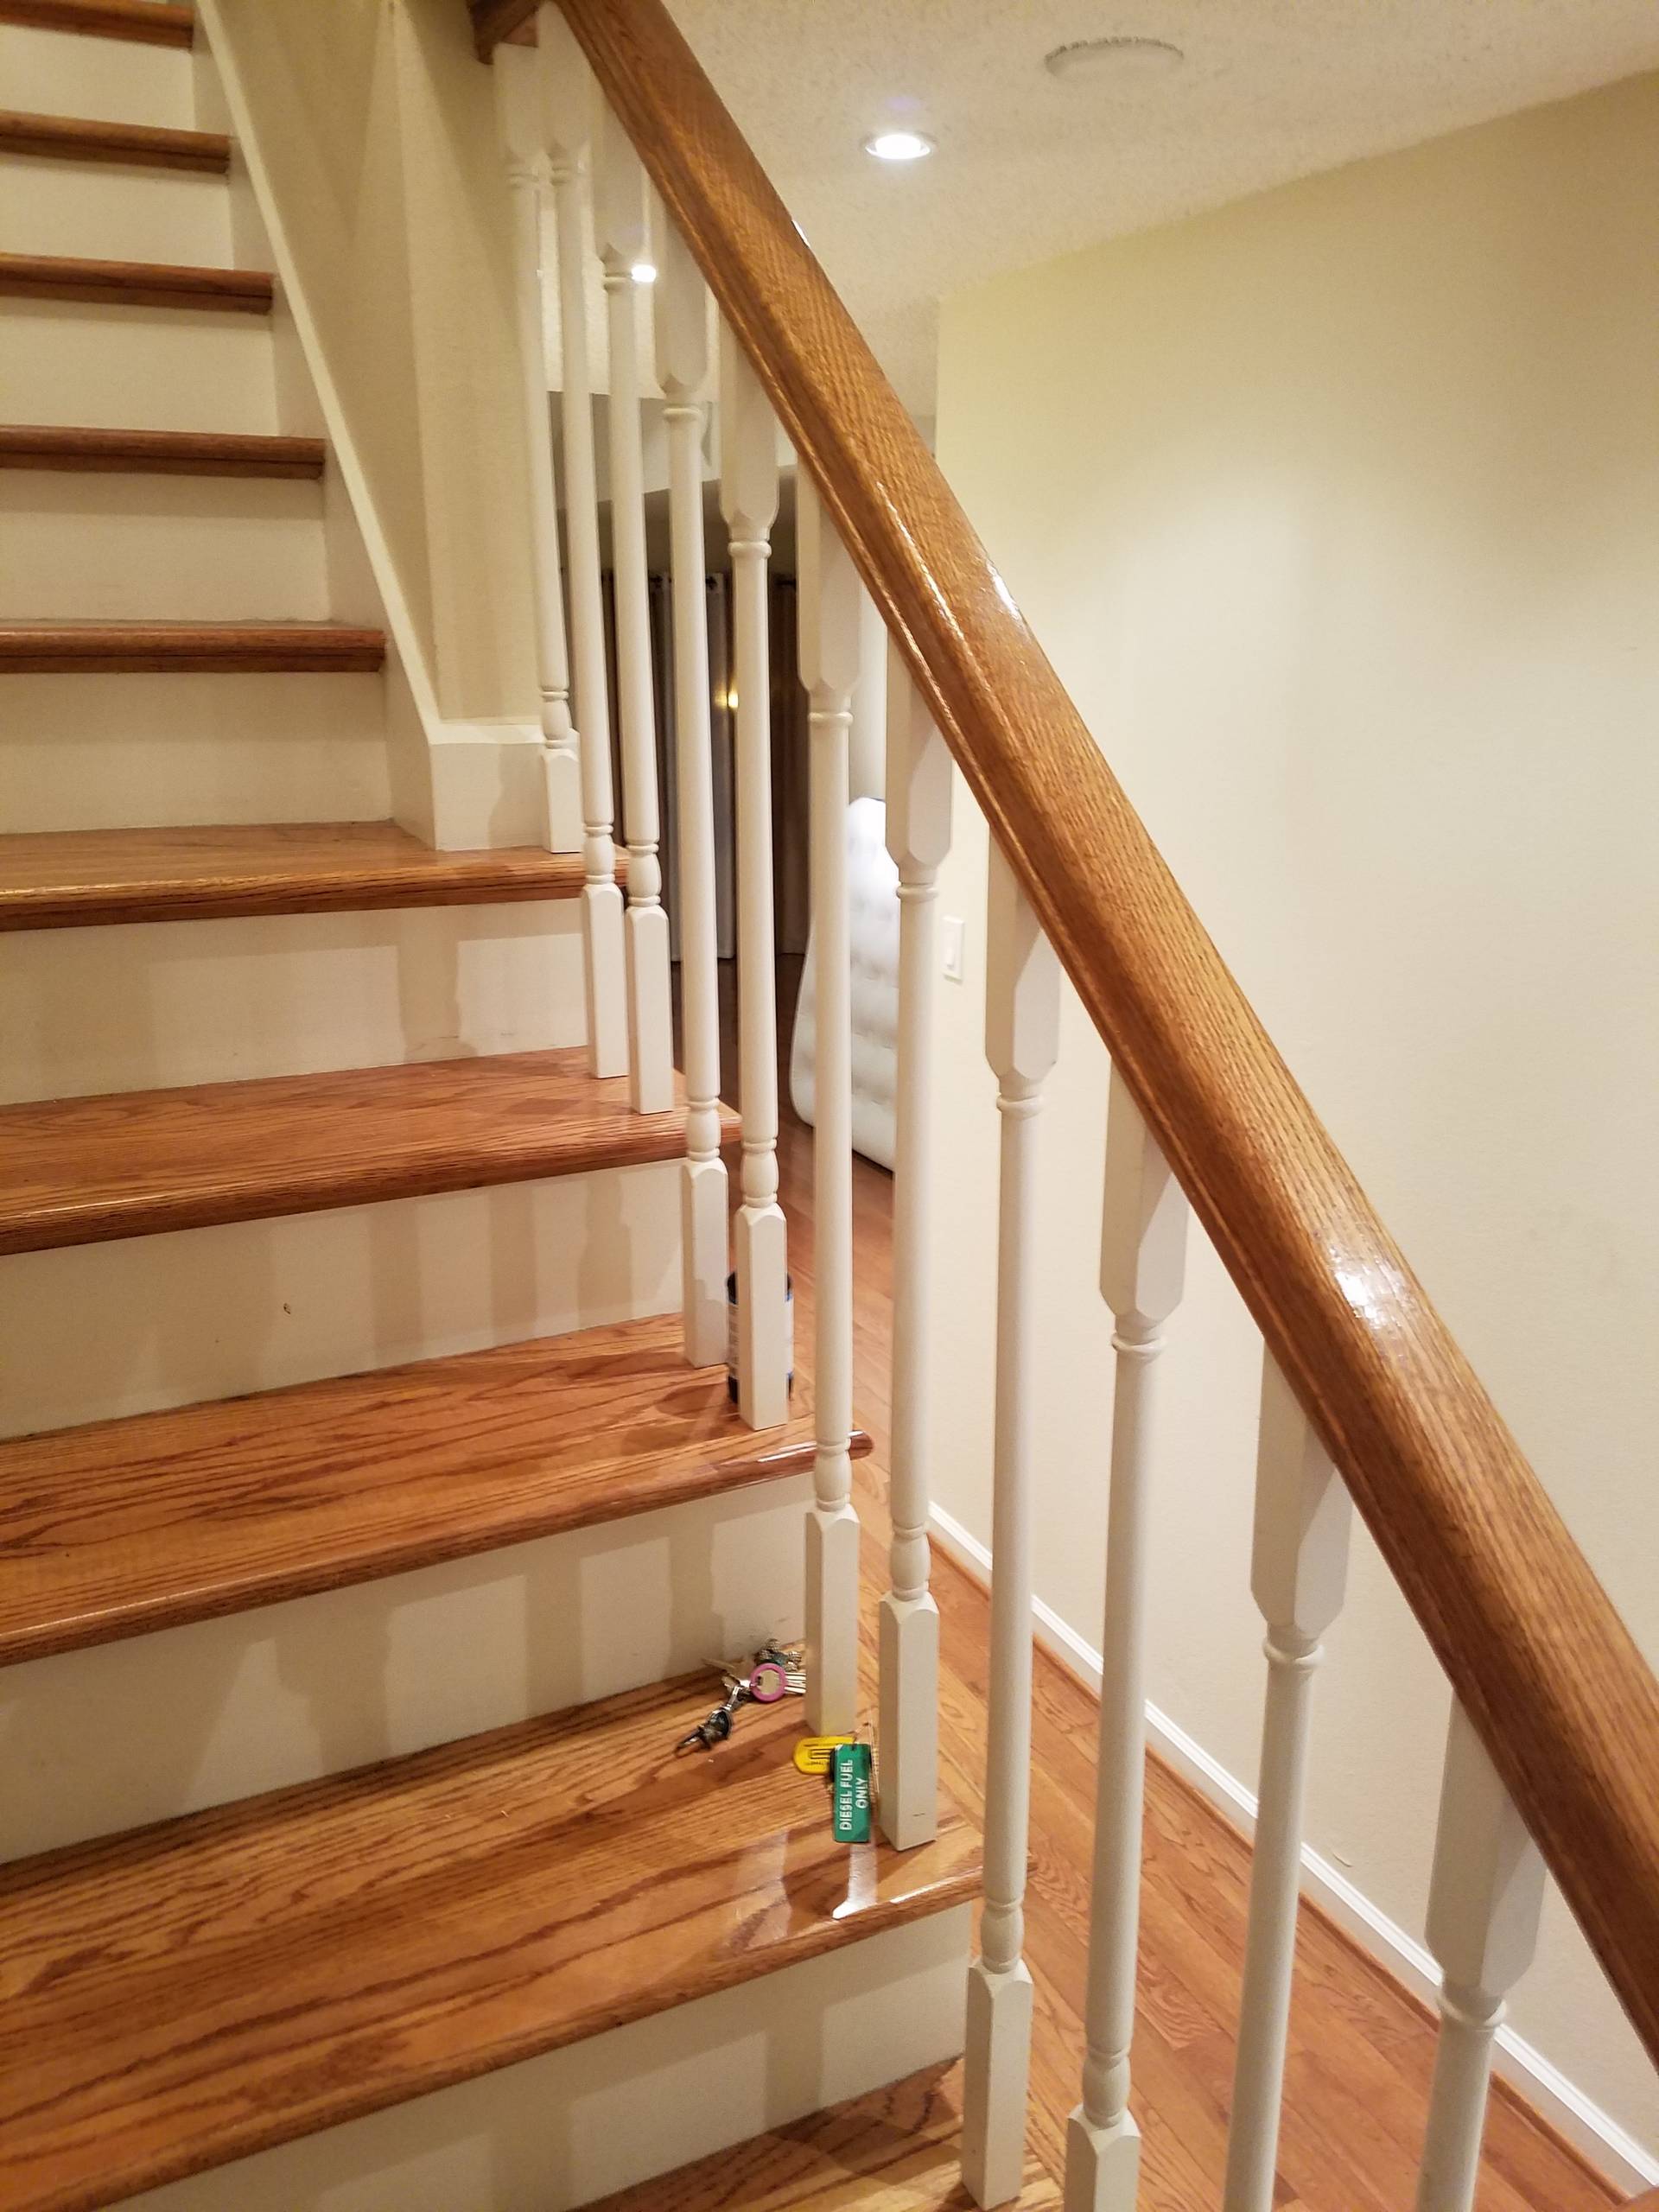 new prefinished woodfloors/ stairs/ handrails